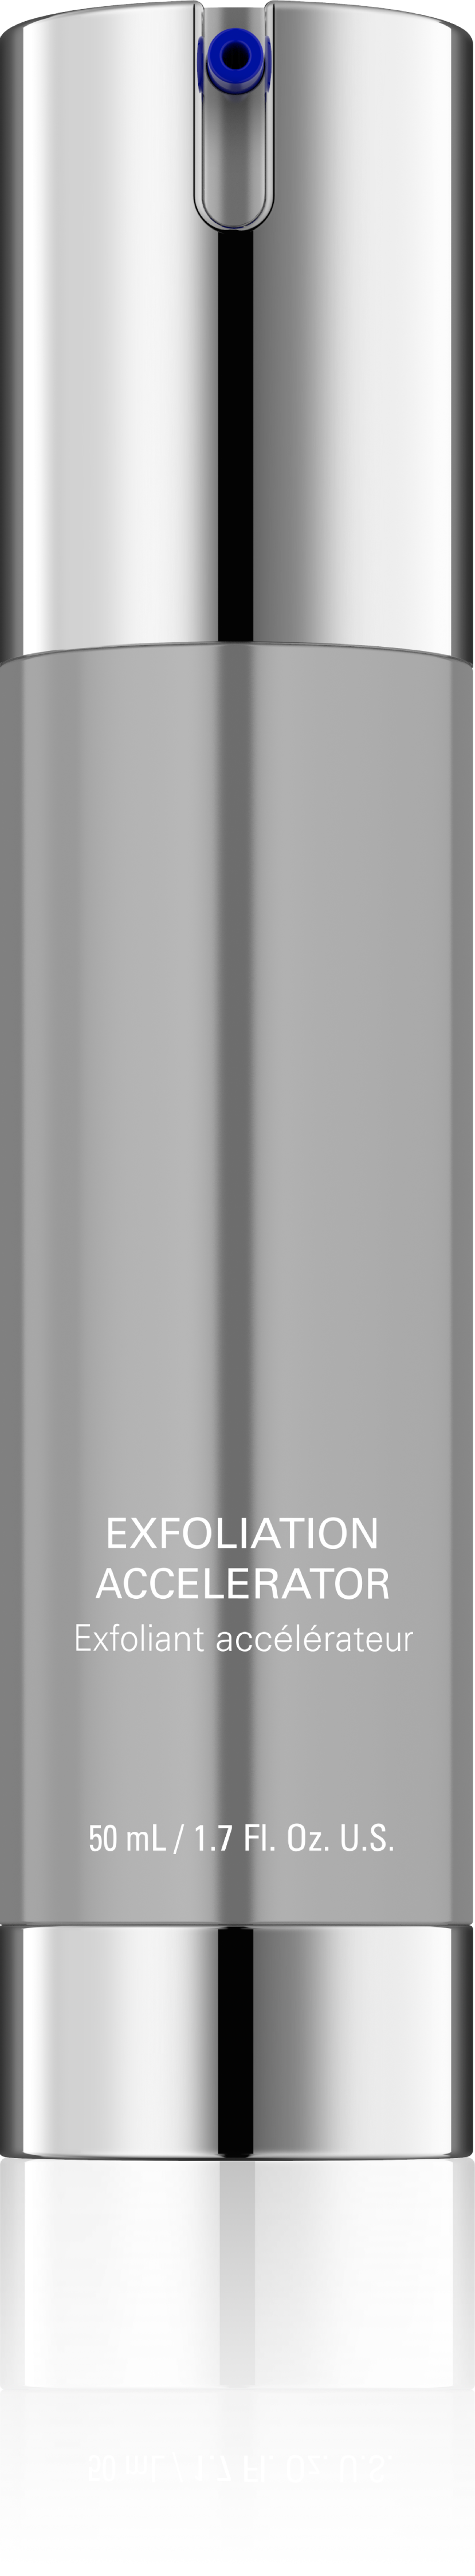 Exfoliation Accelerator